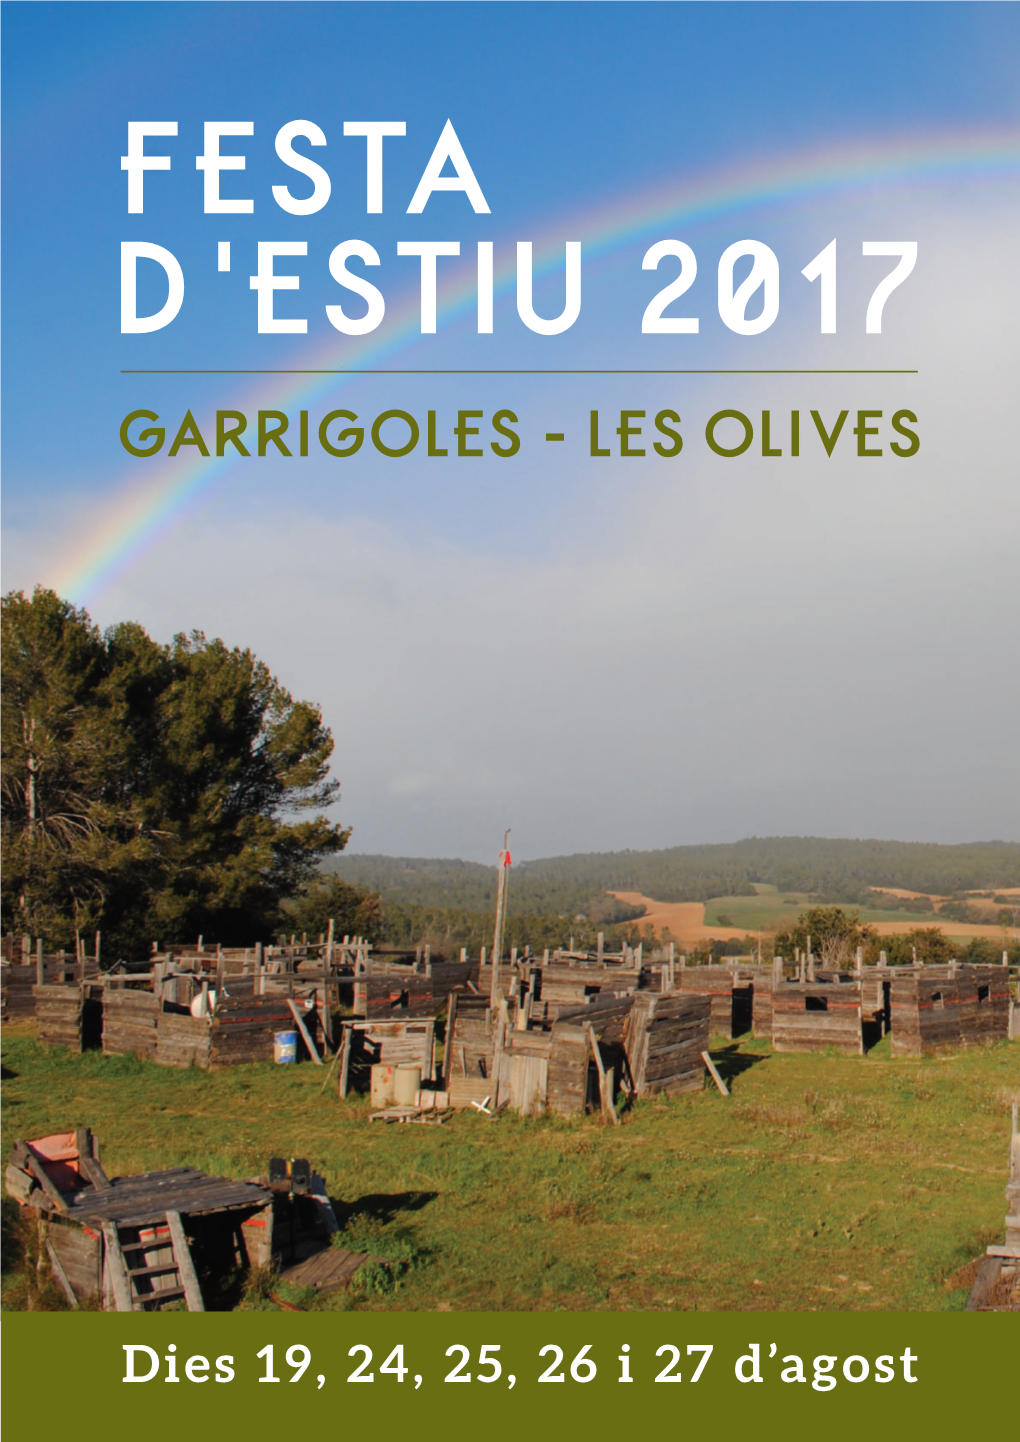 Garrigoles - Les Olives